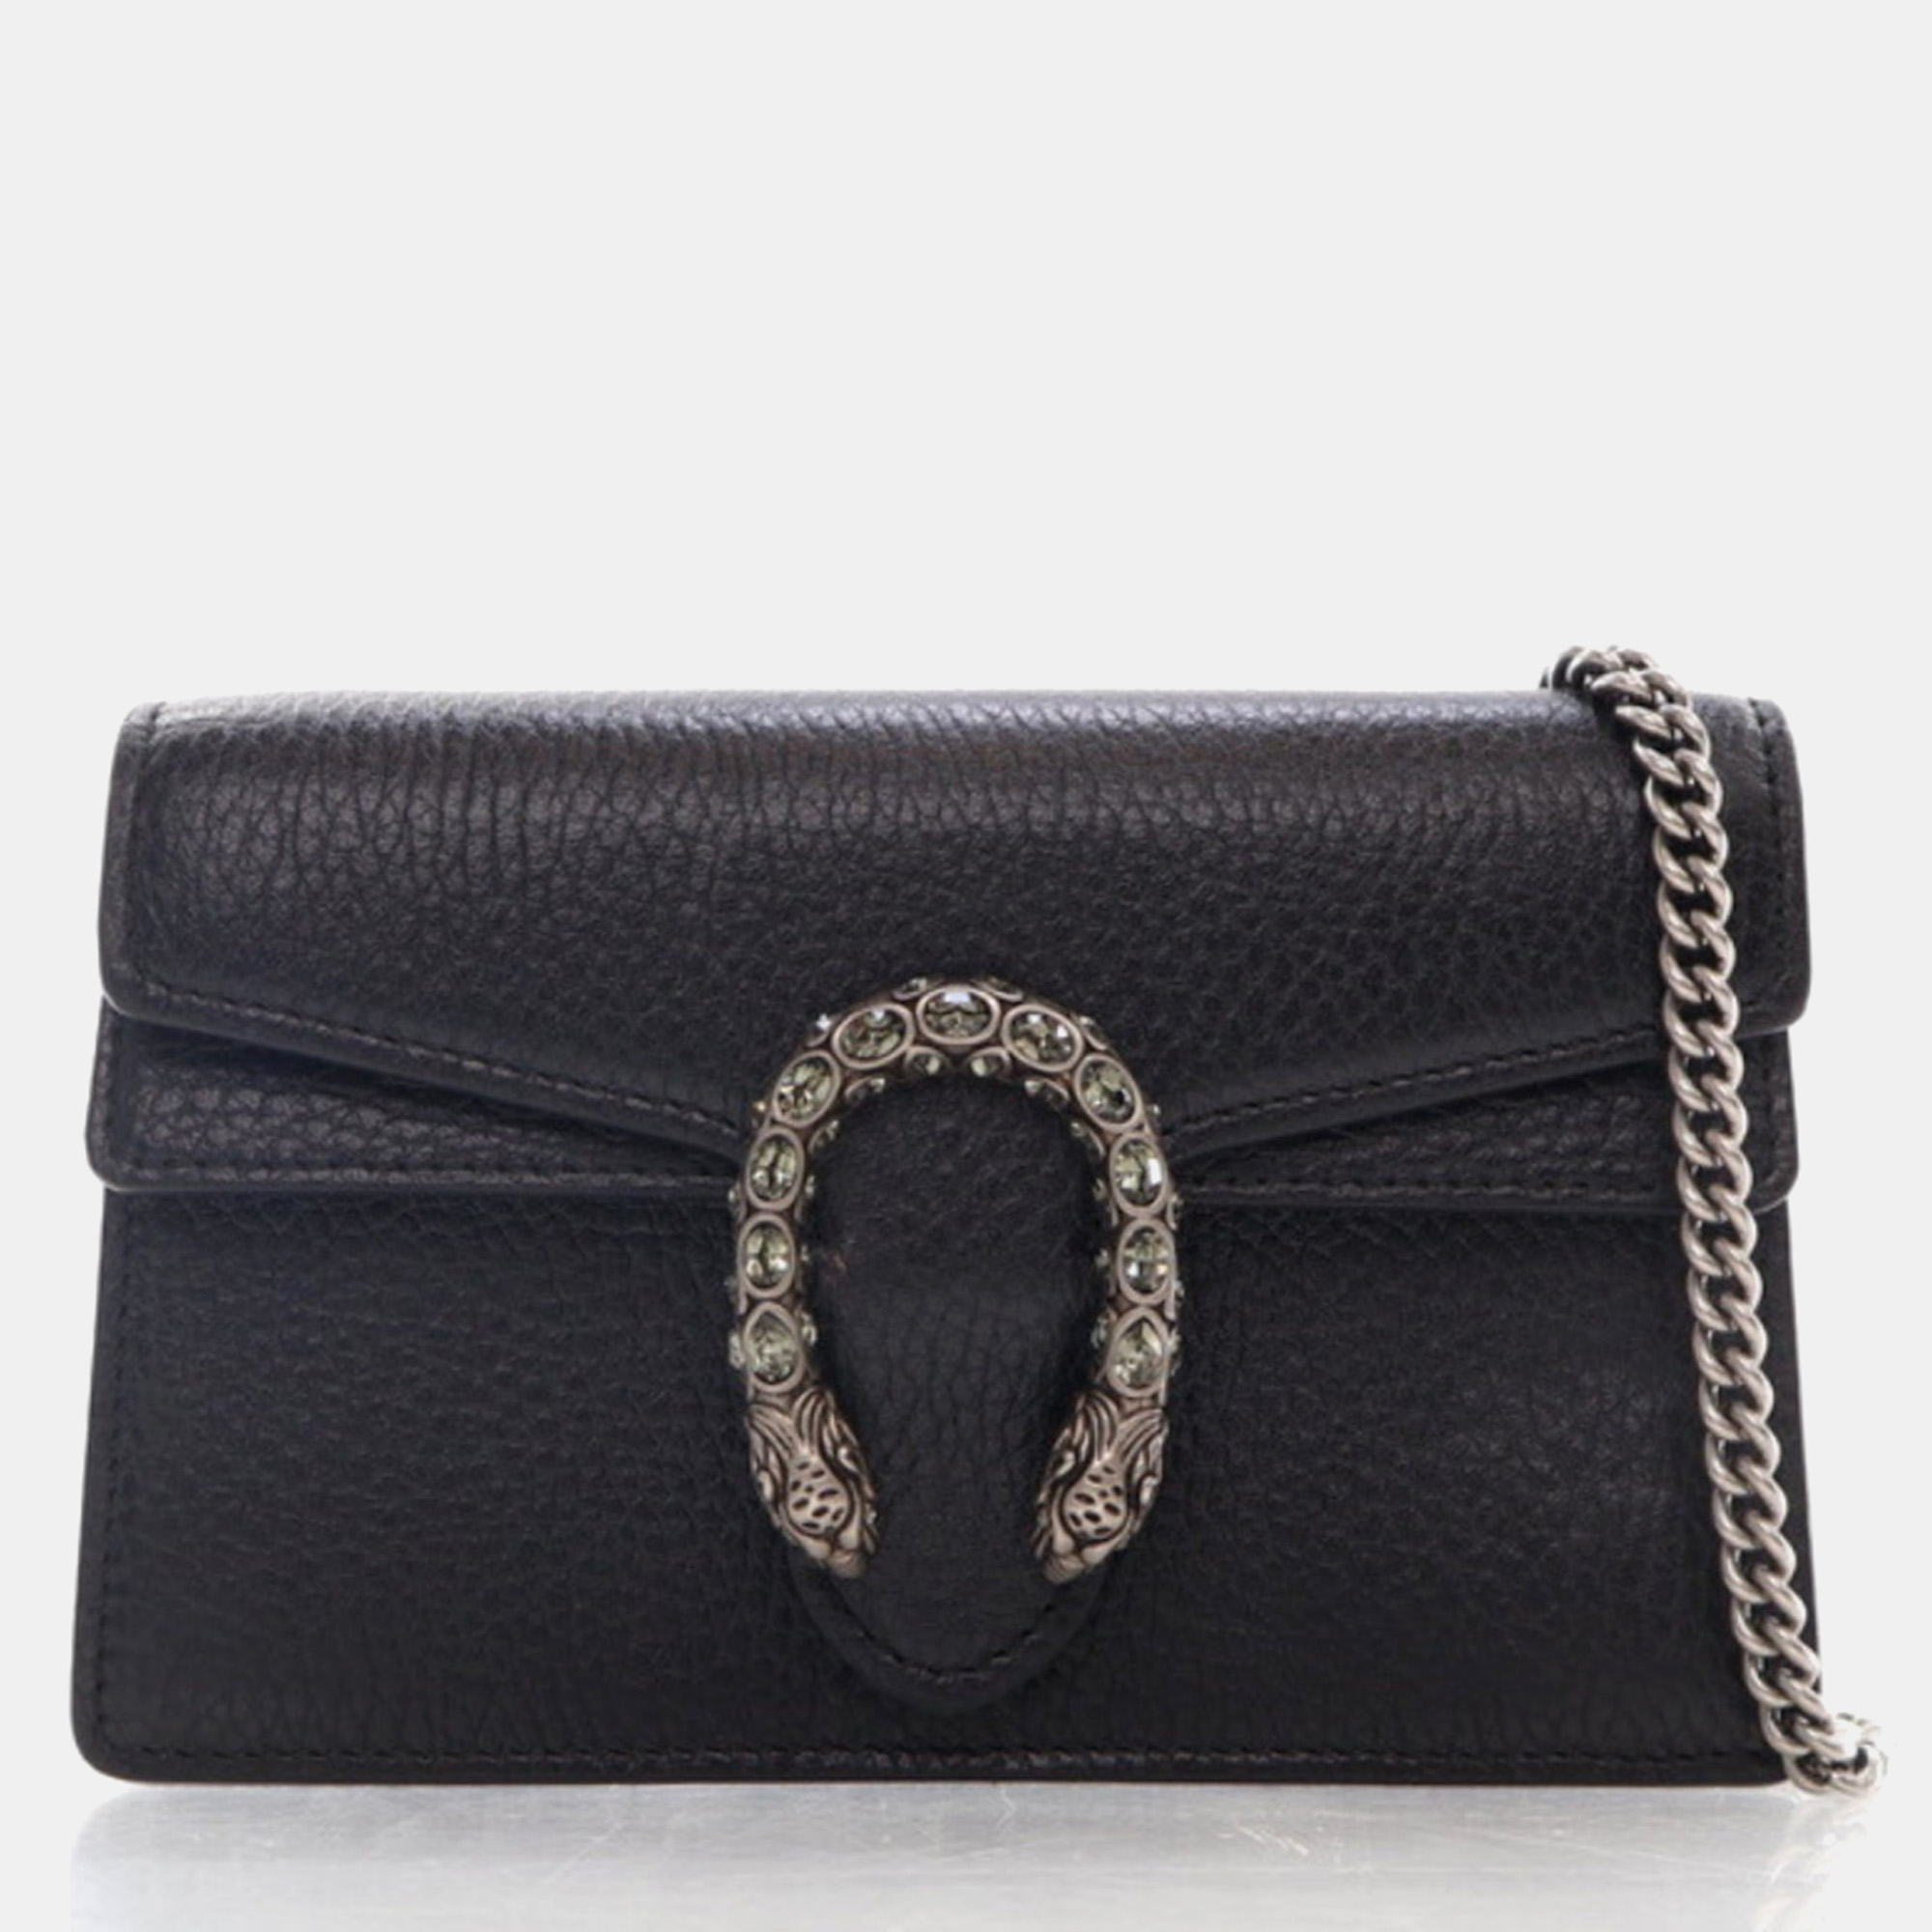 Gucci black leather  small dionysus shoulder bag